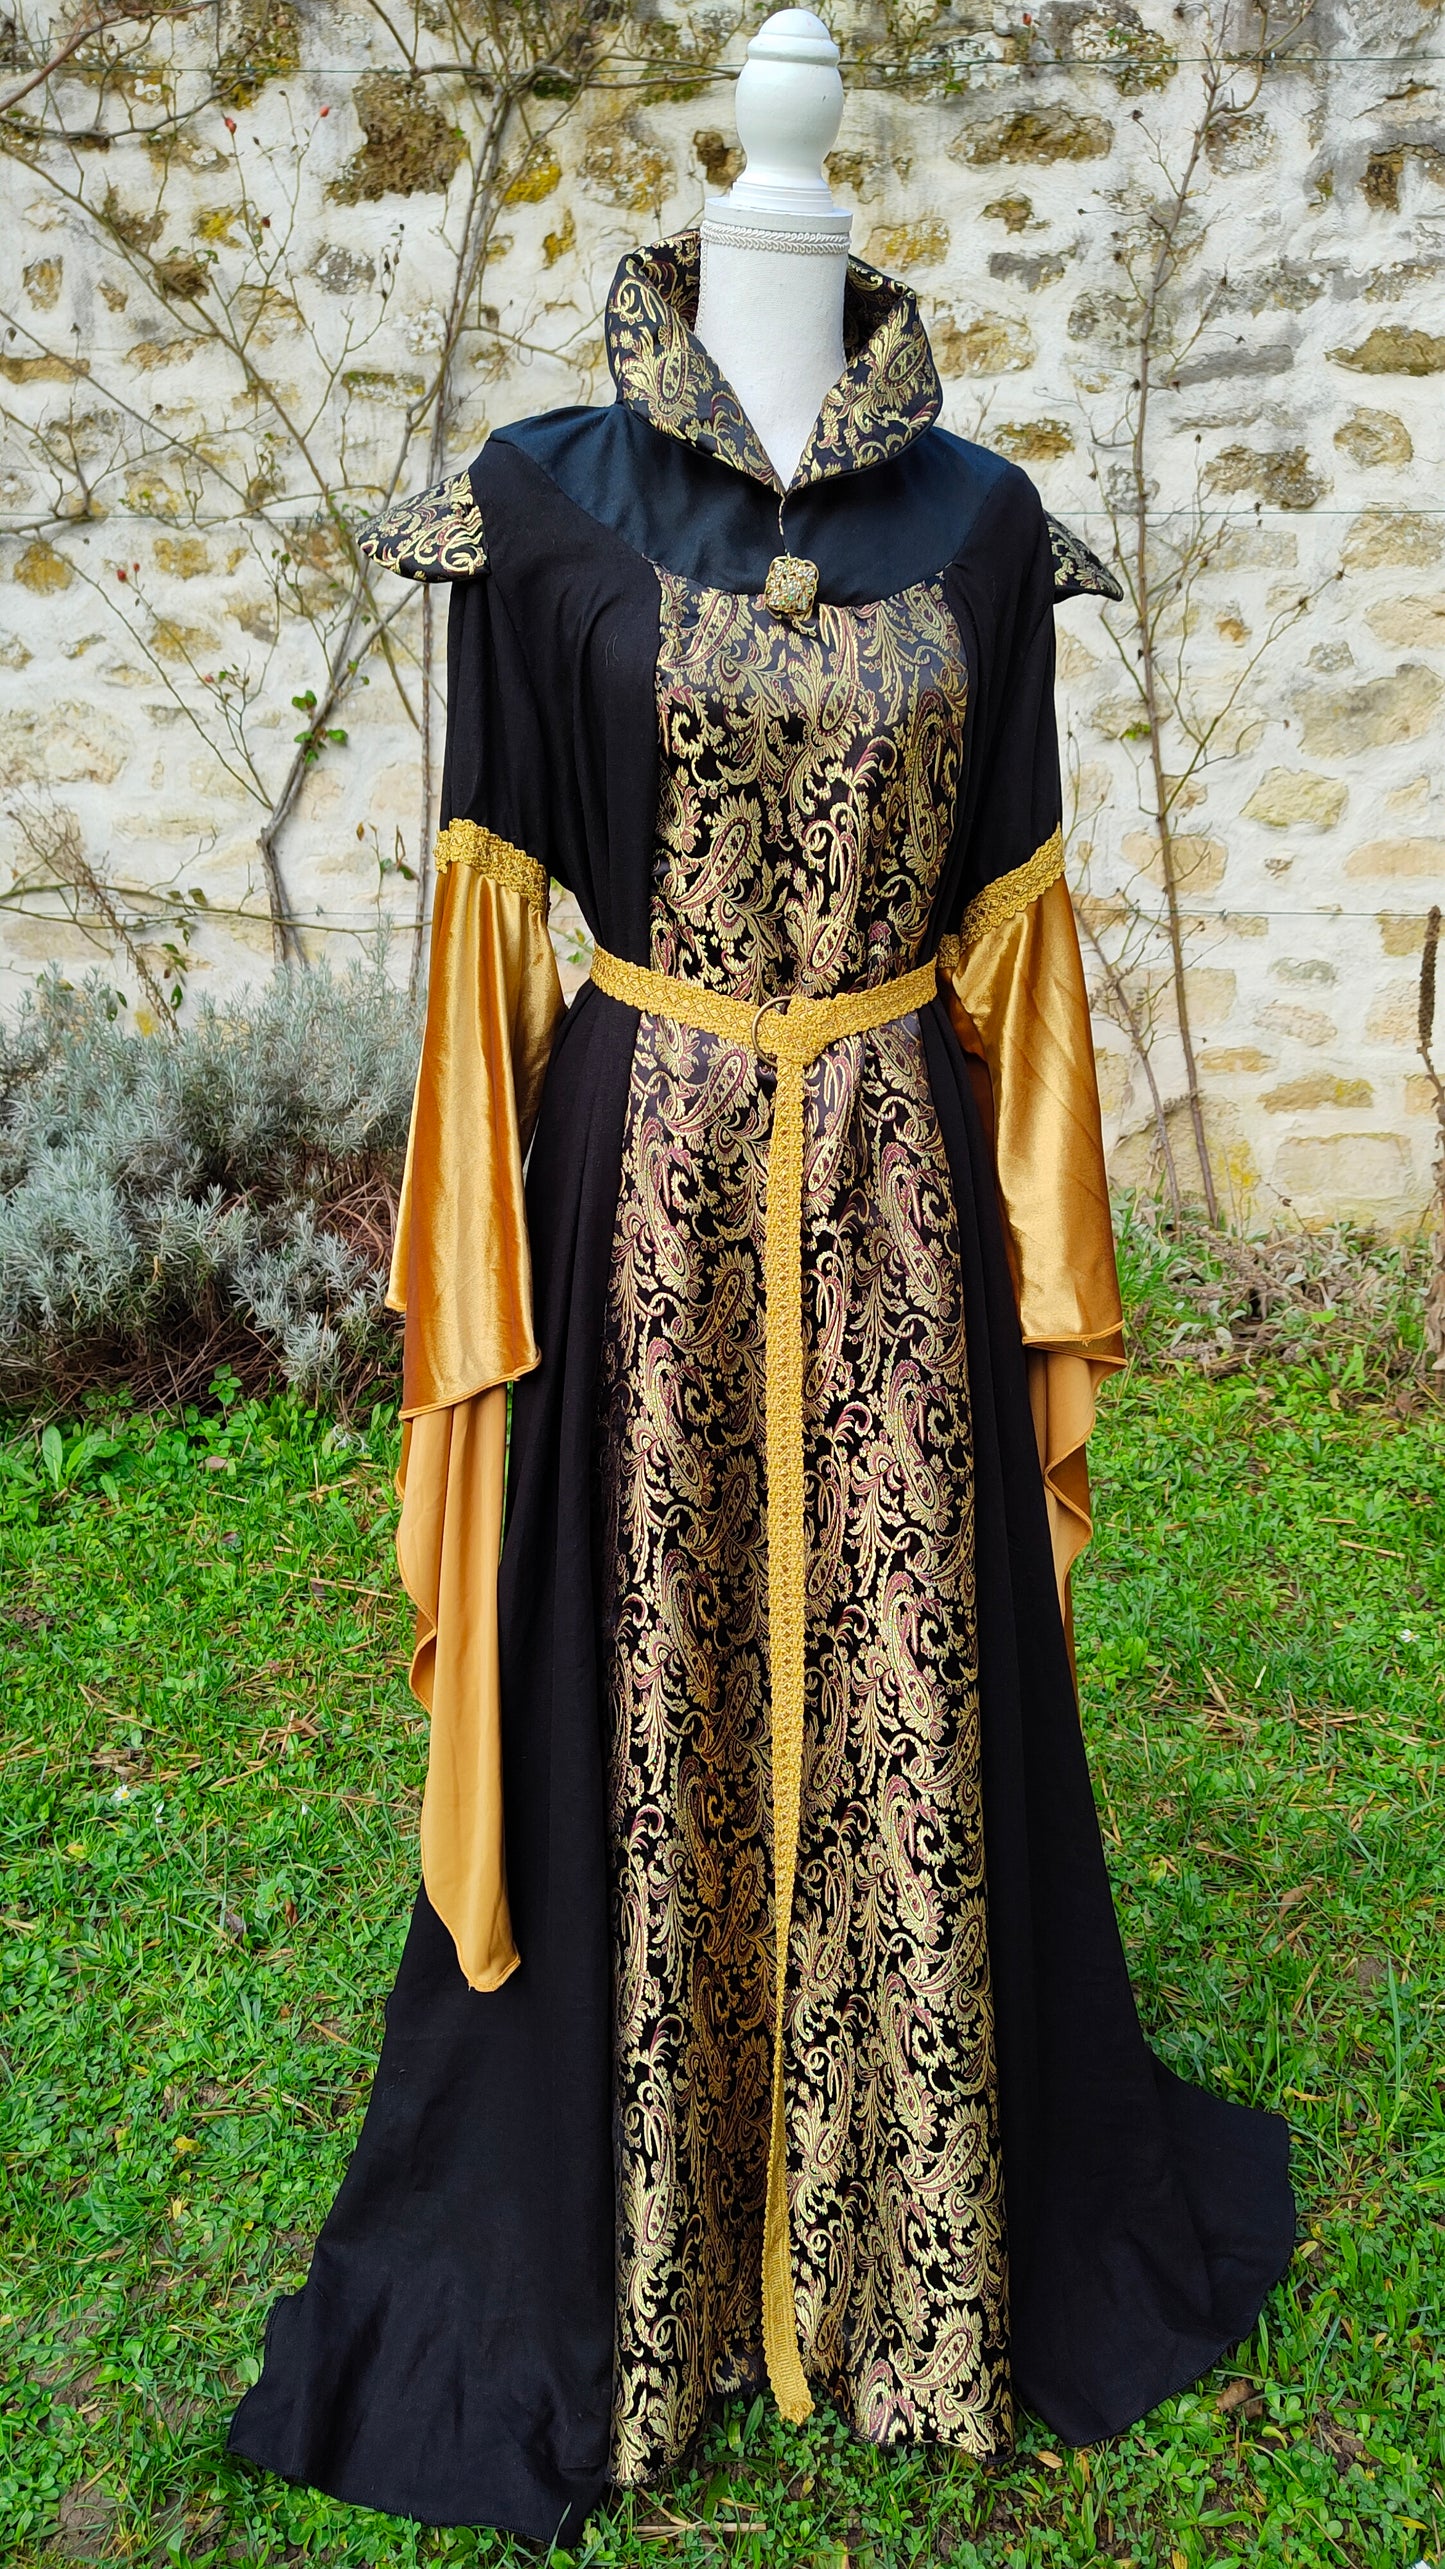 Robe Renaissance en lin noir et brocard